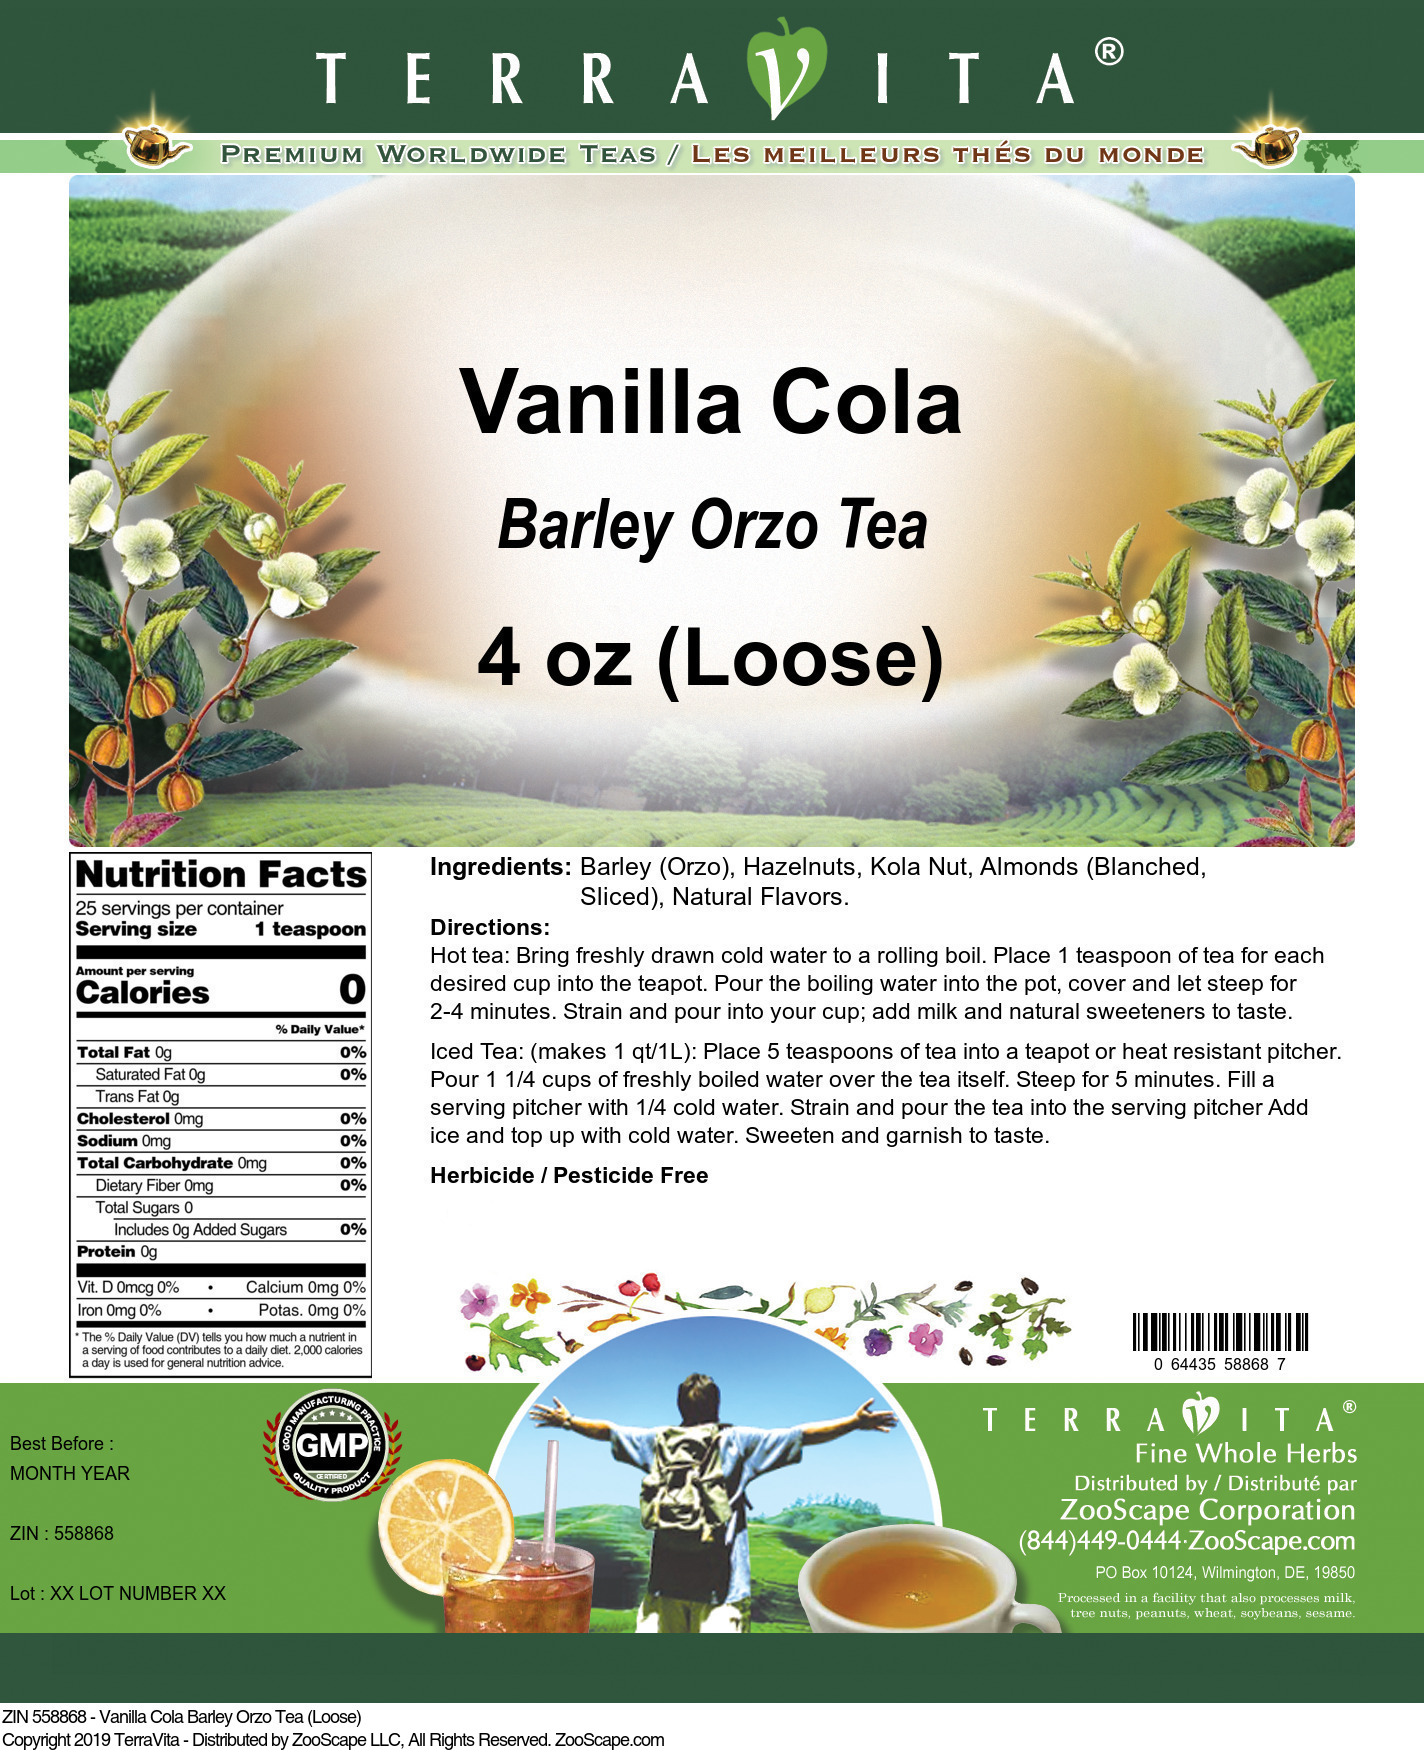 Vanilla Cola Barley Orzo Tea (Loose) - Label